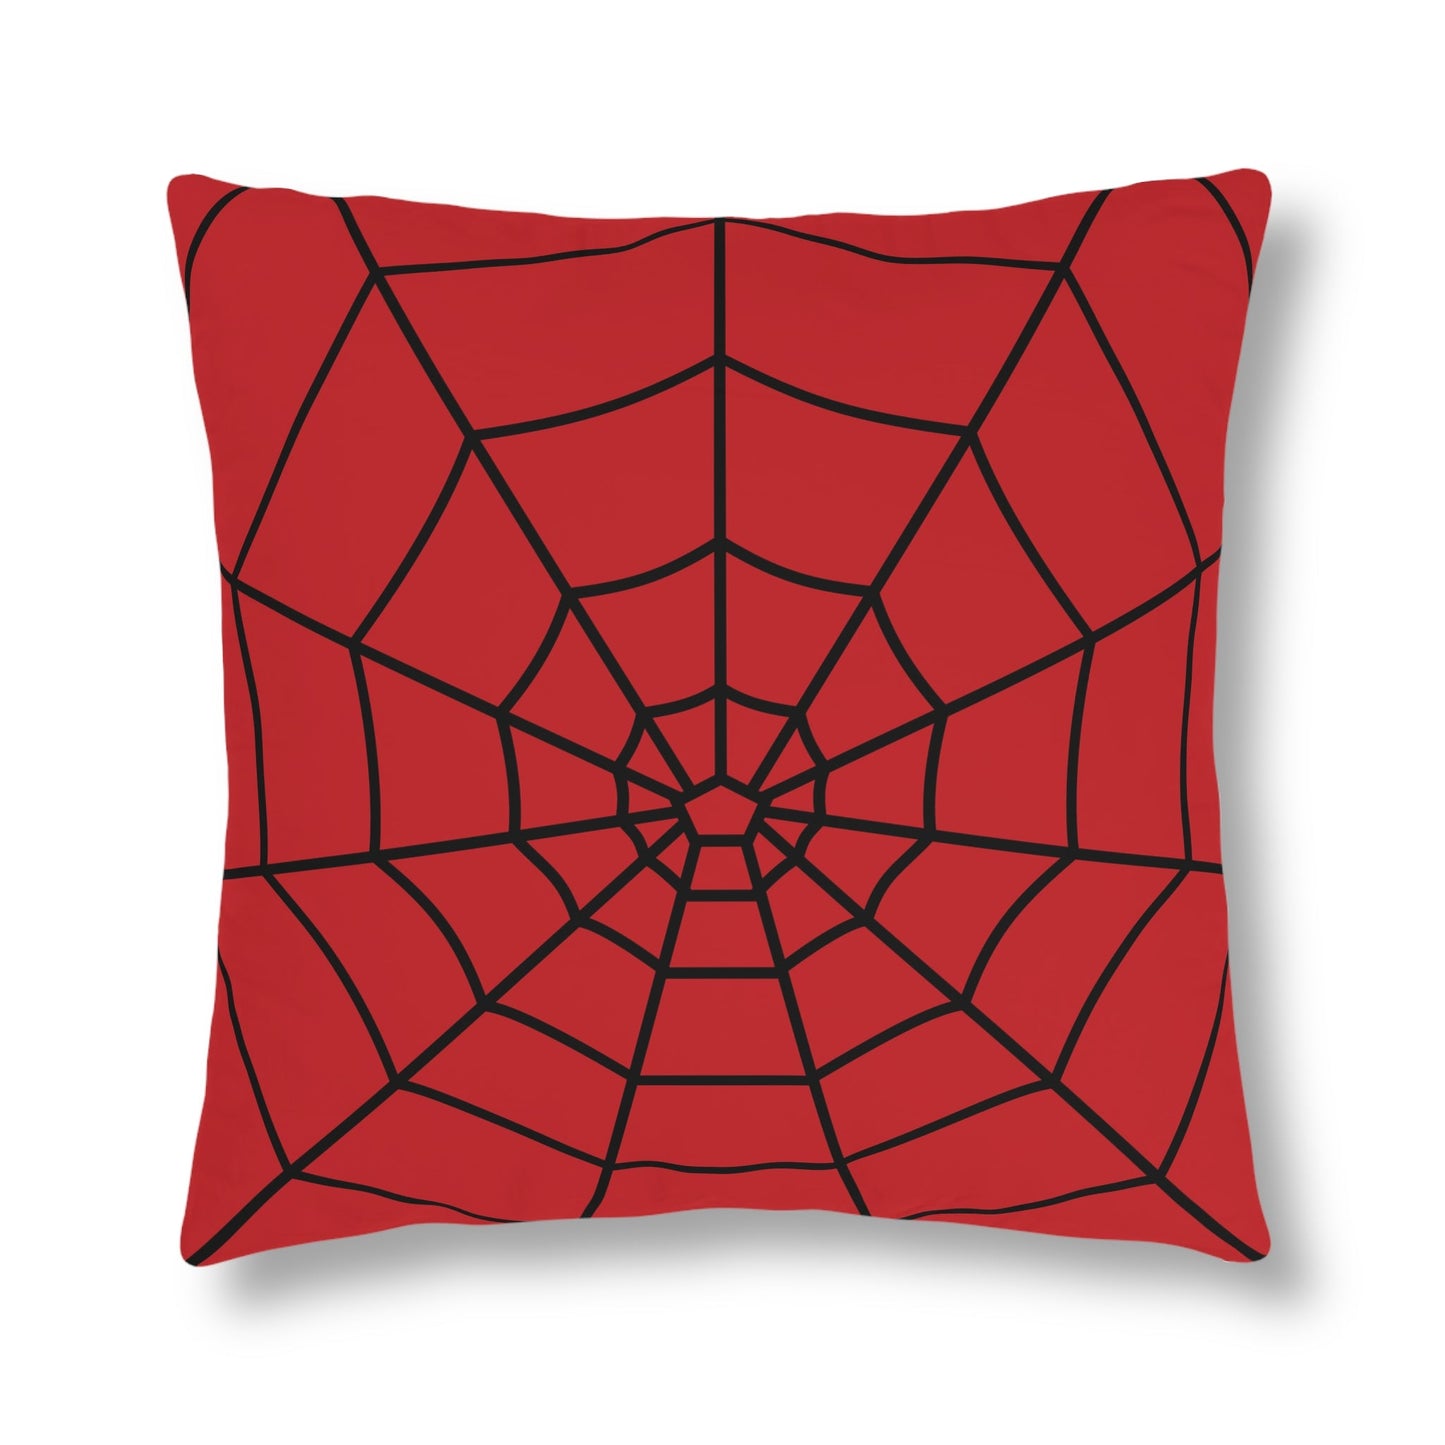 Home Decor - Spider Web Waterproof Pillows